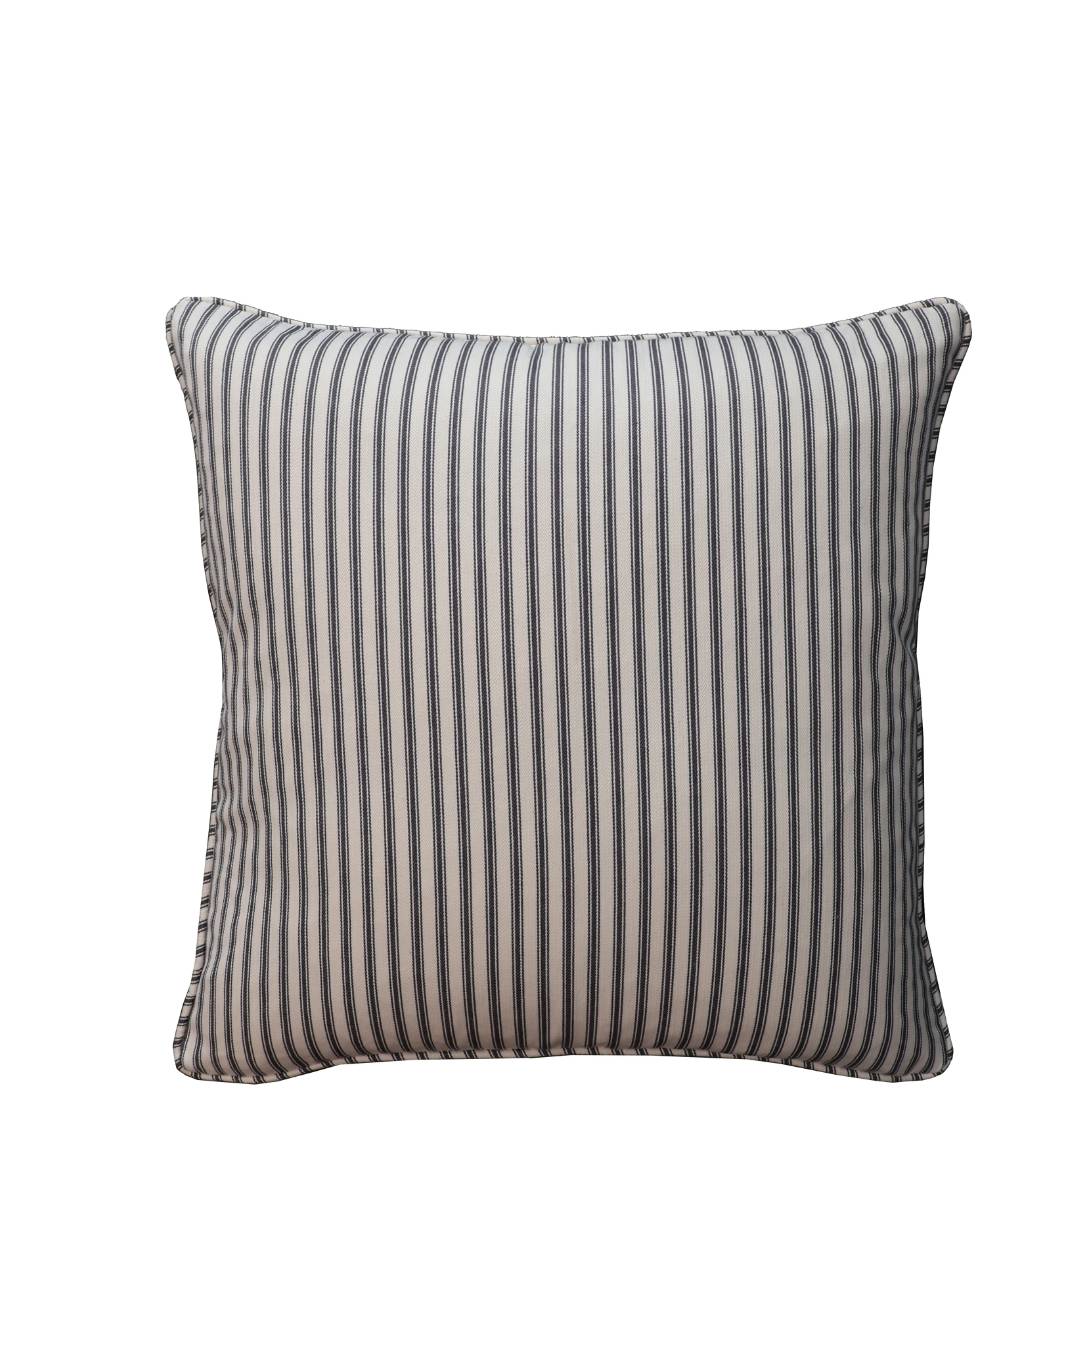 Ticking Stripe Cushion - Charcoal